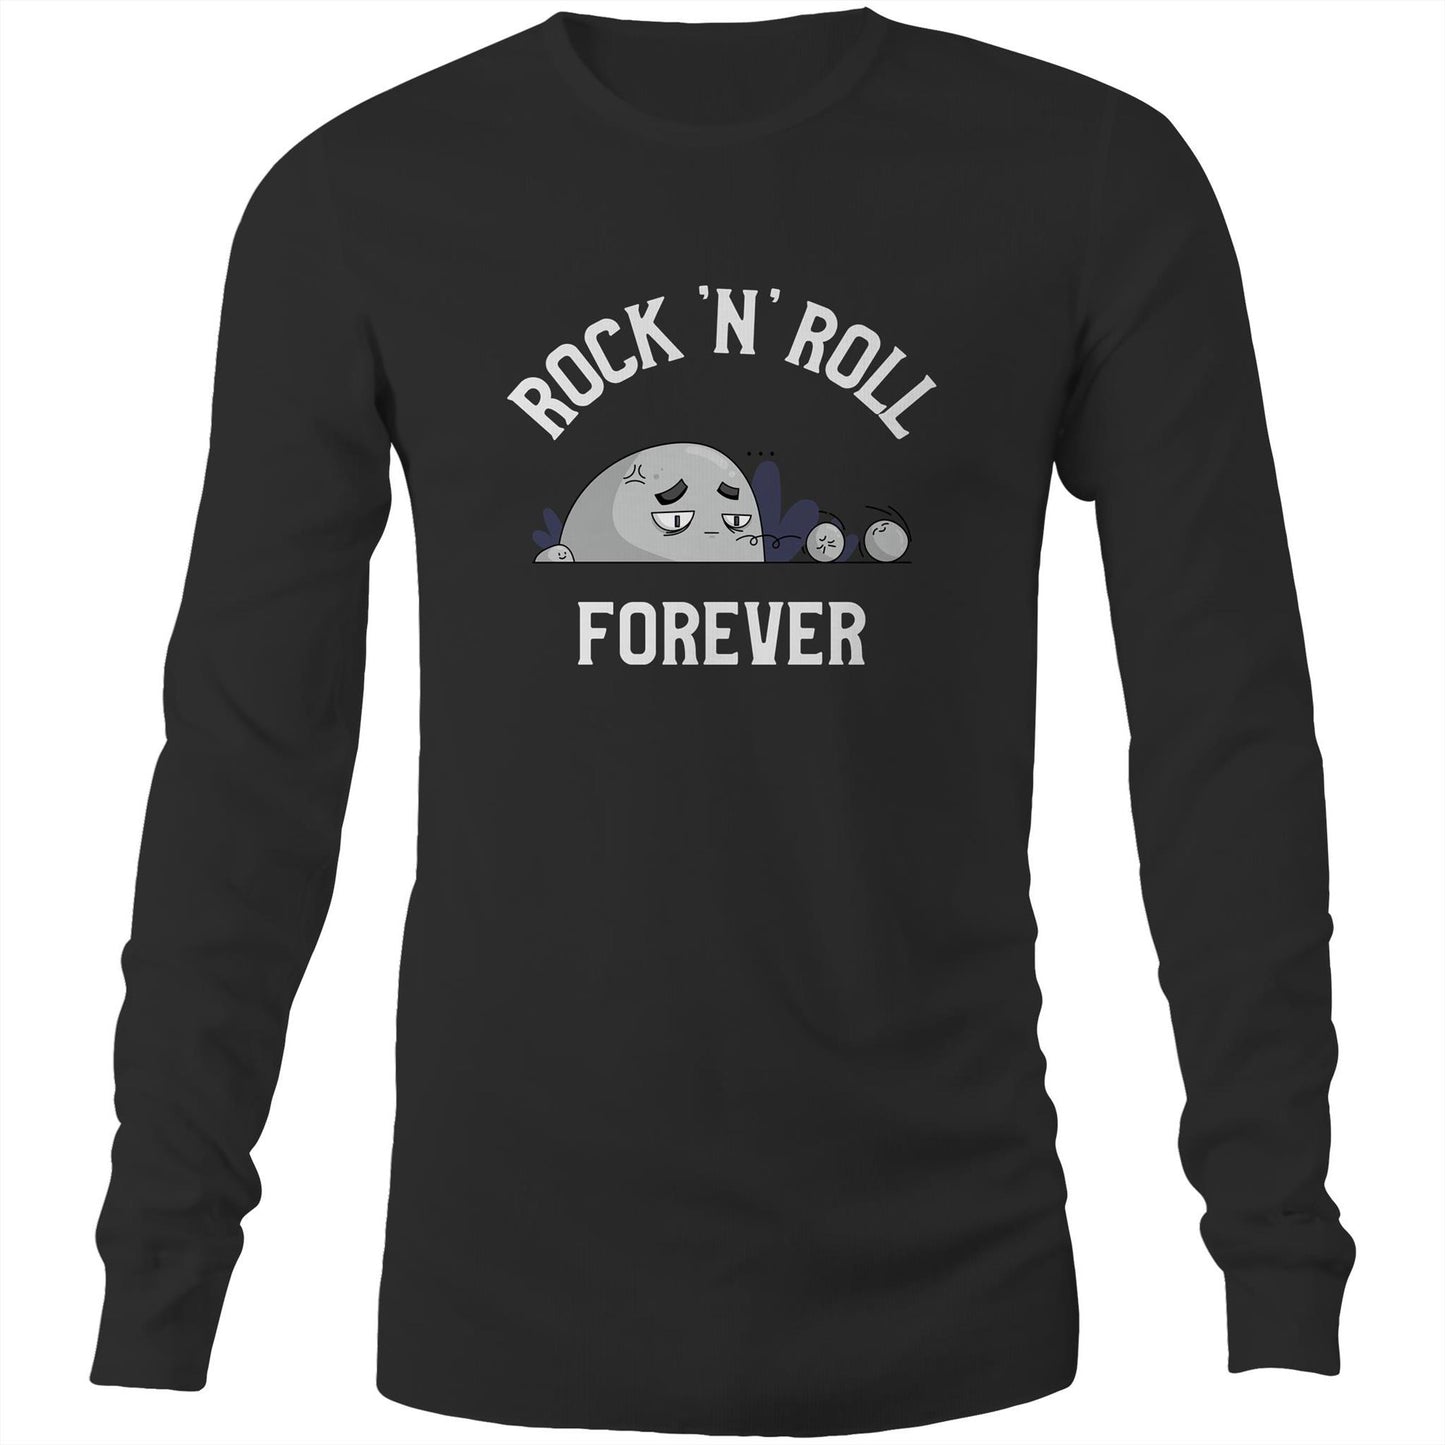 Rock 'N' Roll Forever - Long Sleeve T-Shirt Black Unisex Long Sleeve T-shirt Music